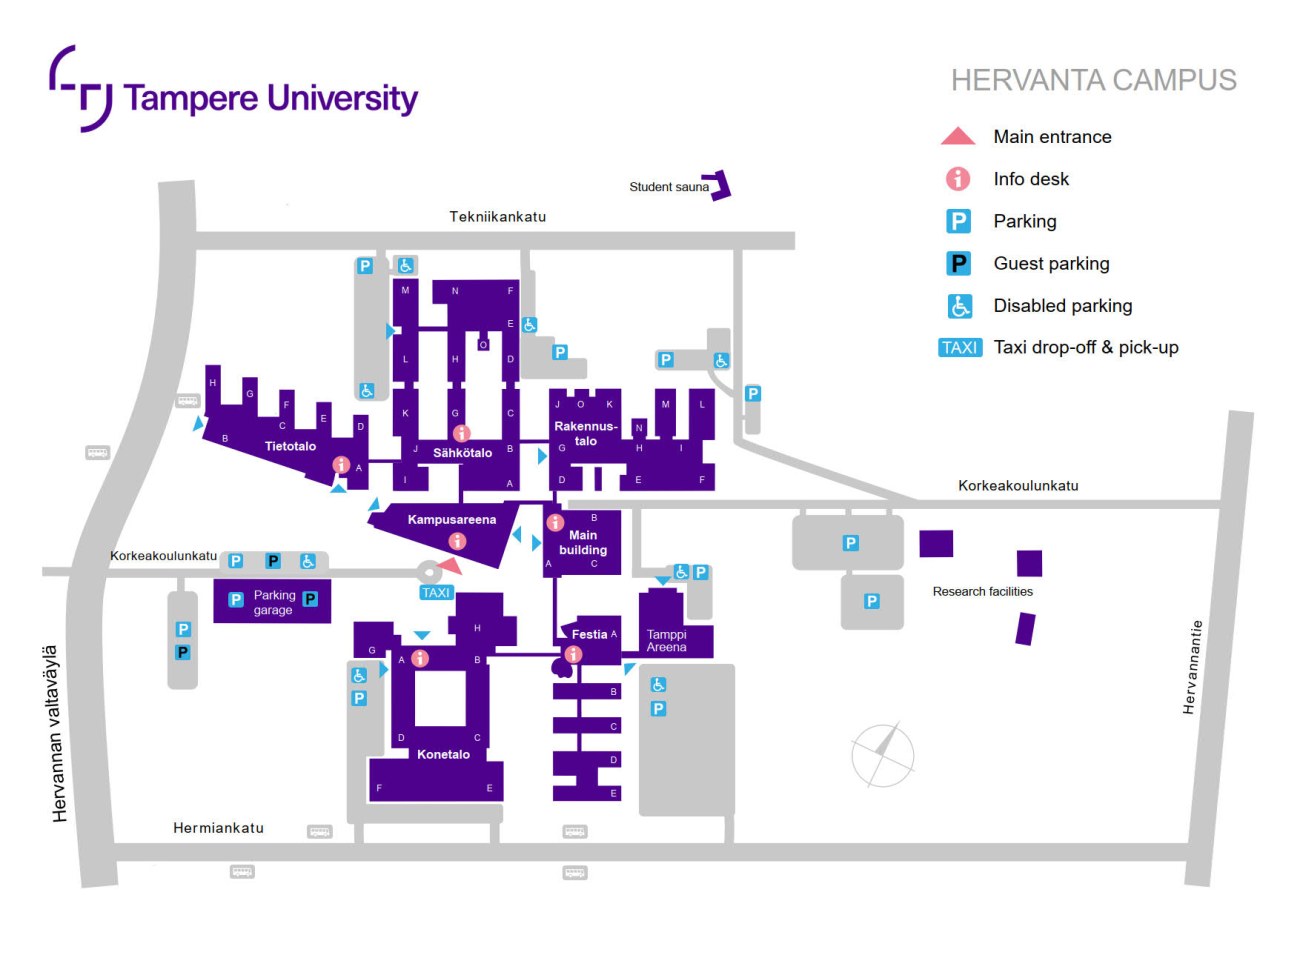 Hervanta campus map